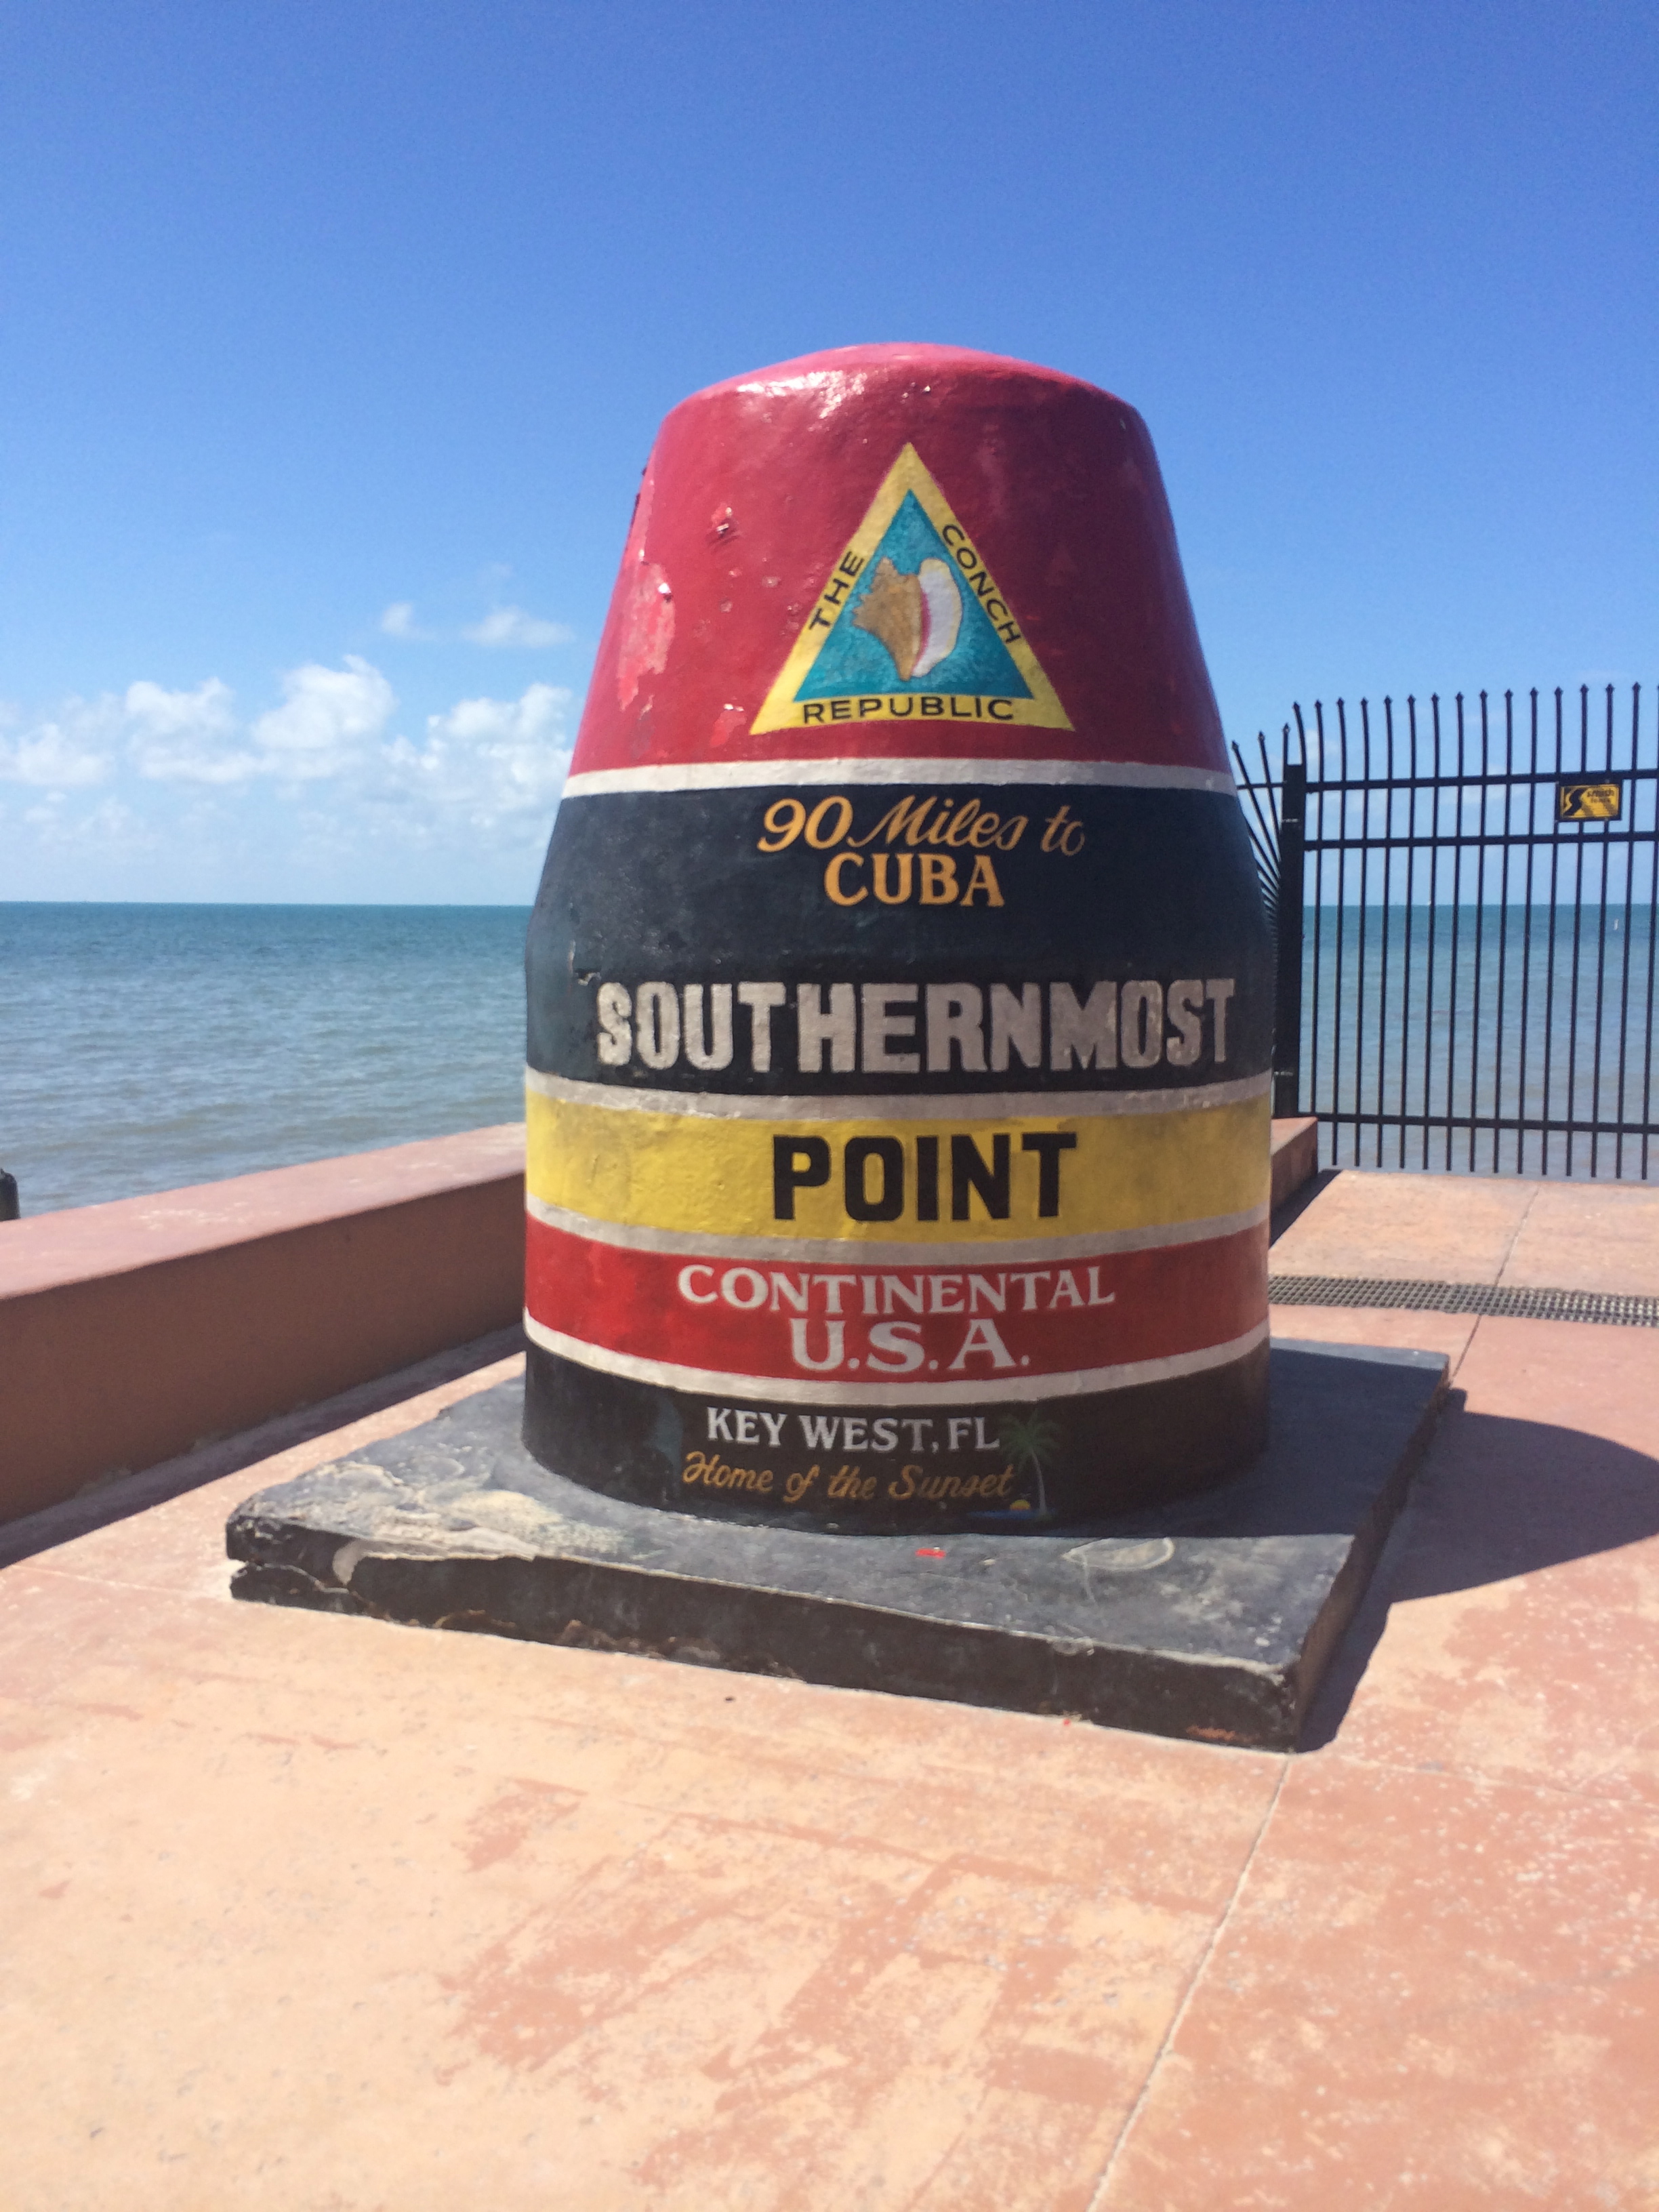 Key West Weekend Getaway | Best Hotel in Key West | Casa Marina Hotel | Southernmost Point